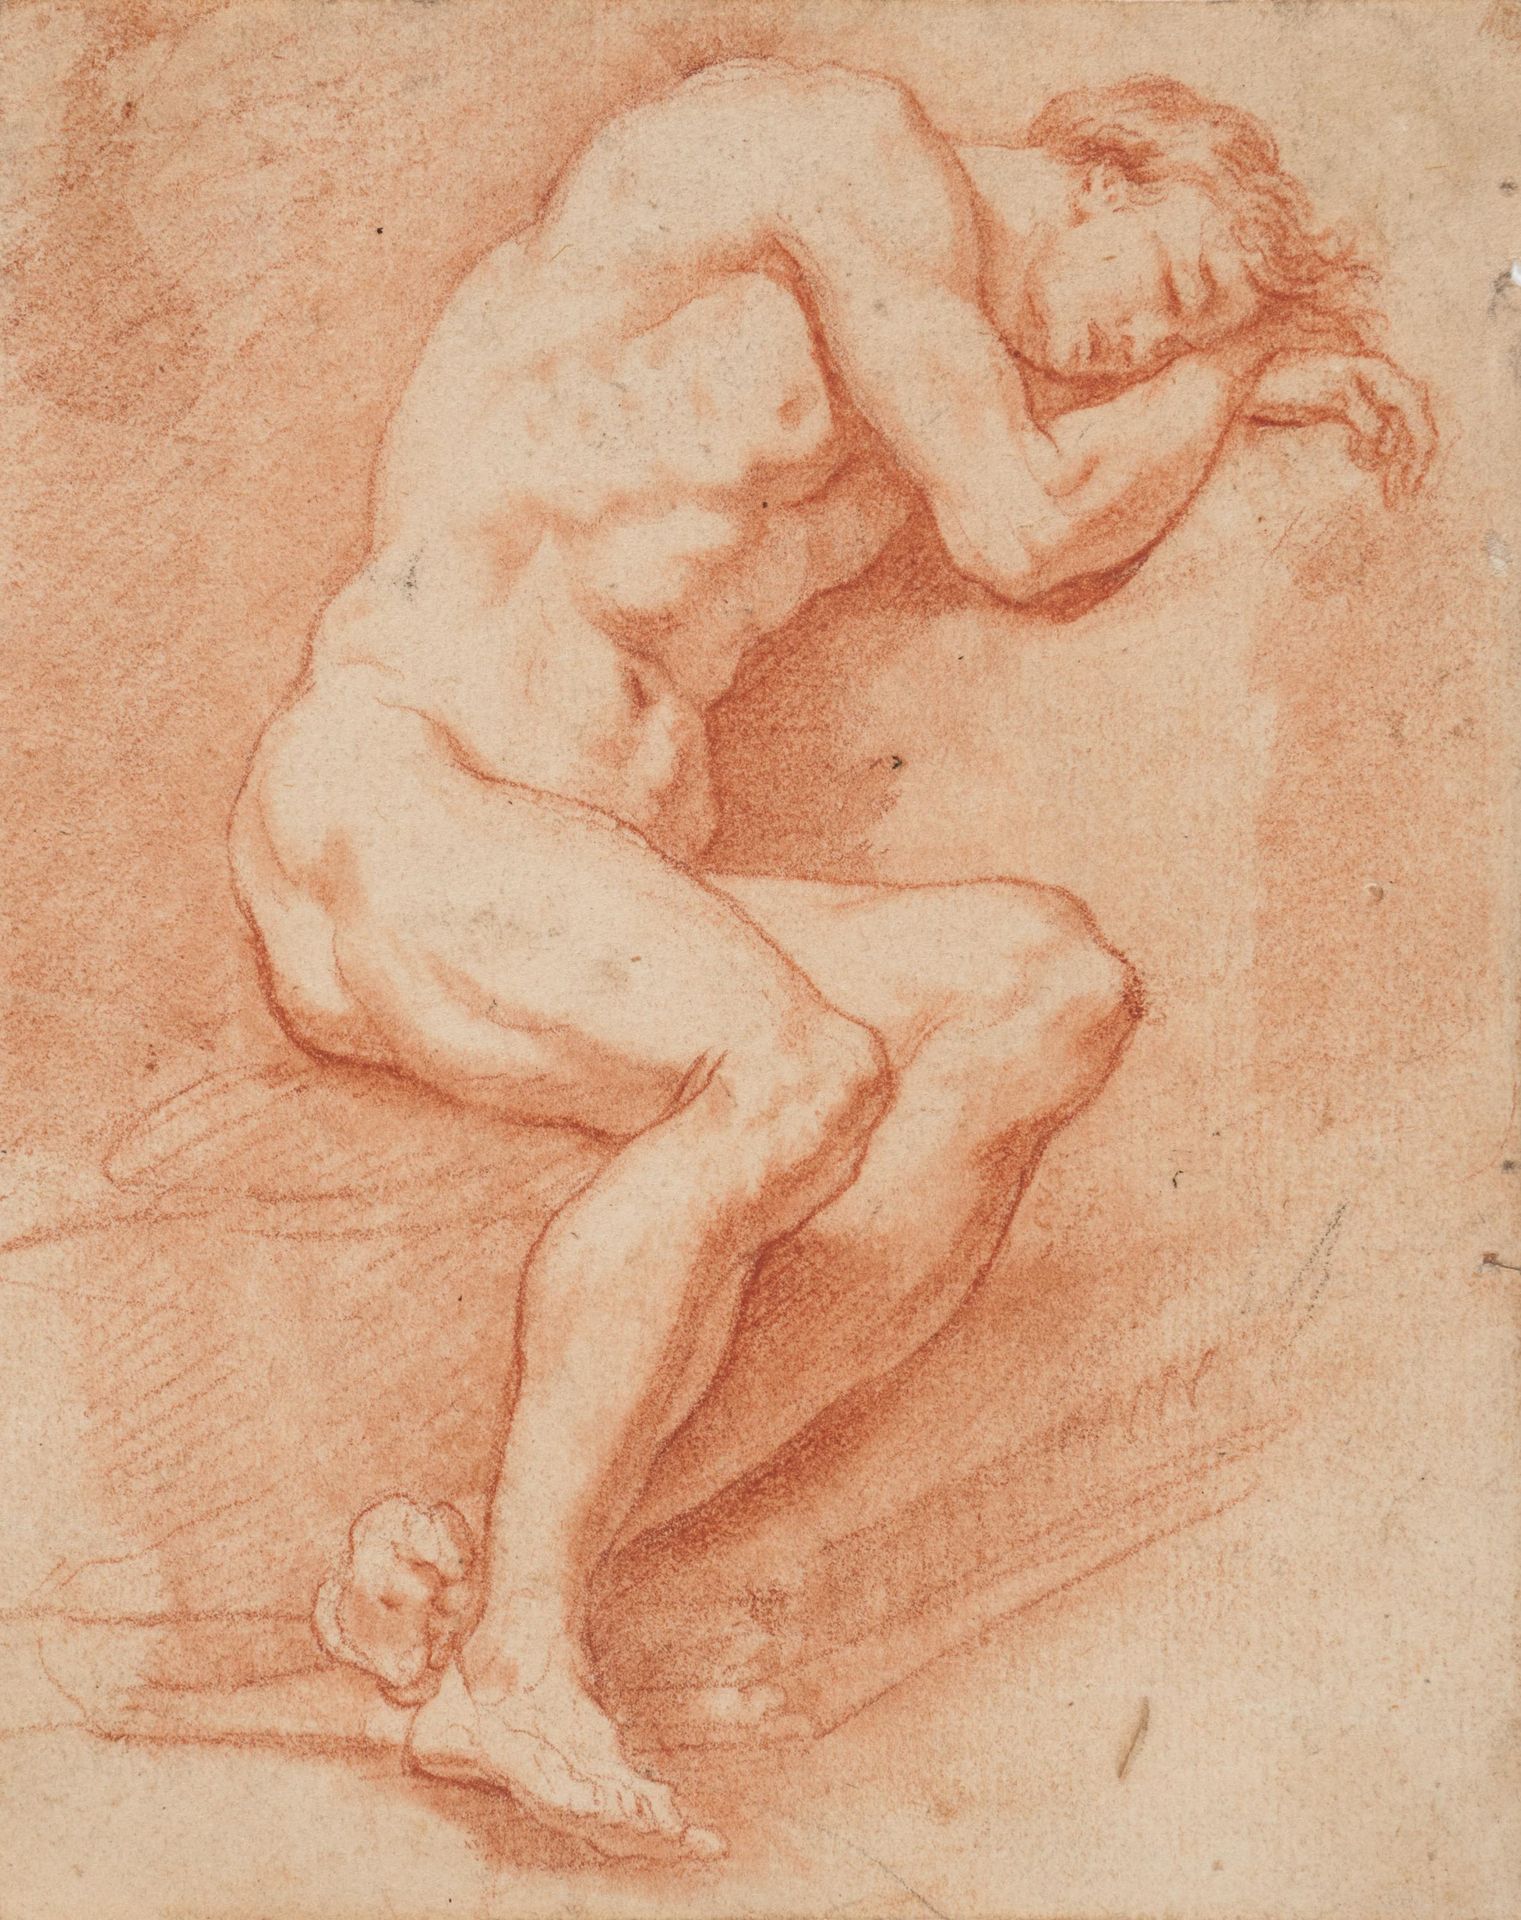 ITALIENISCHE SCHULE 意大利学校
18世纪
标题： 男性裸体。
研究。
技术： 红色粉笔画在纸上。
尺寸： 14,5 x 11,5cm。

意&hellip;